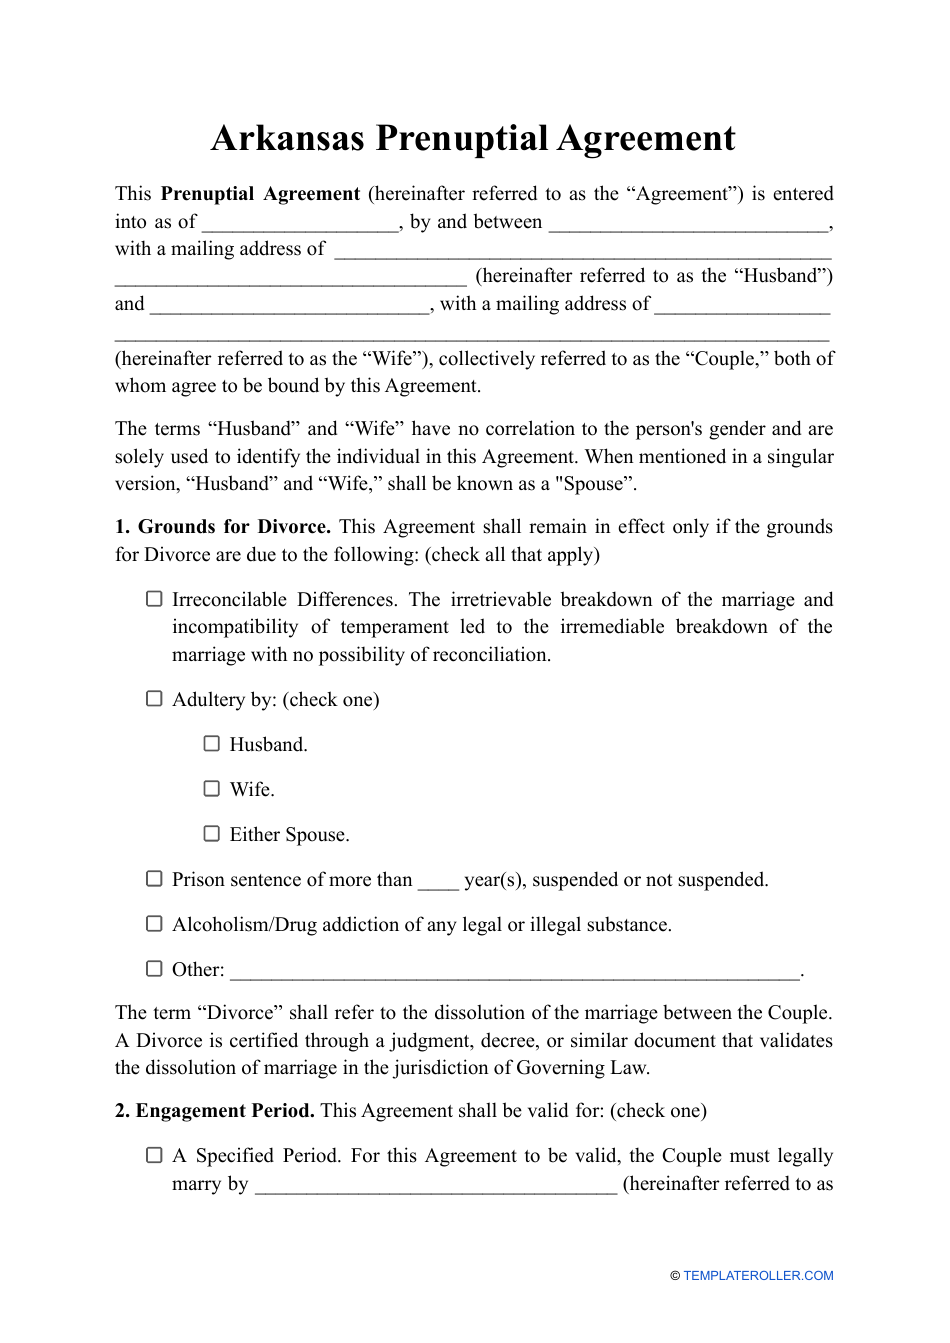 Prenuptial Agreement Template - Arkansas, Page 1